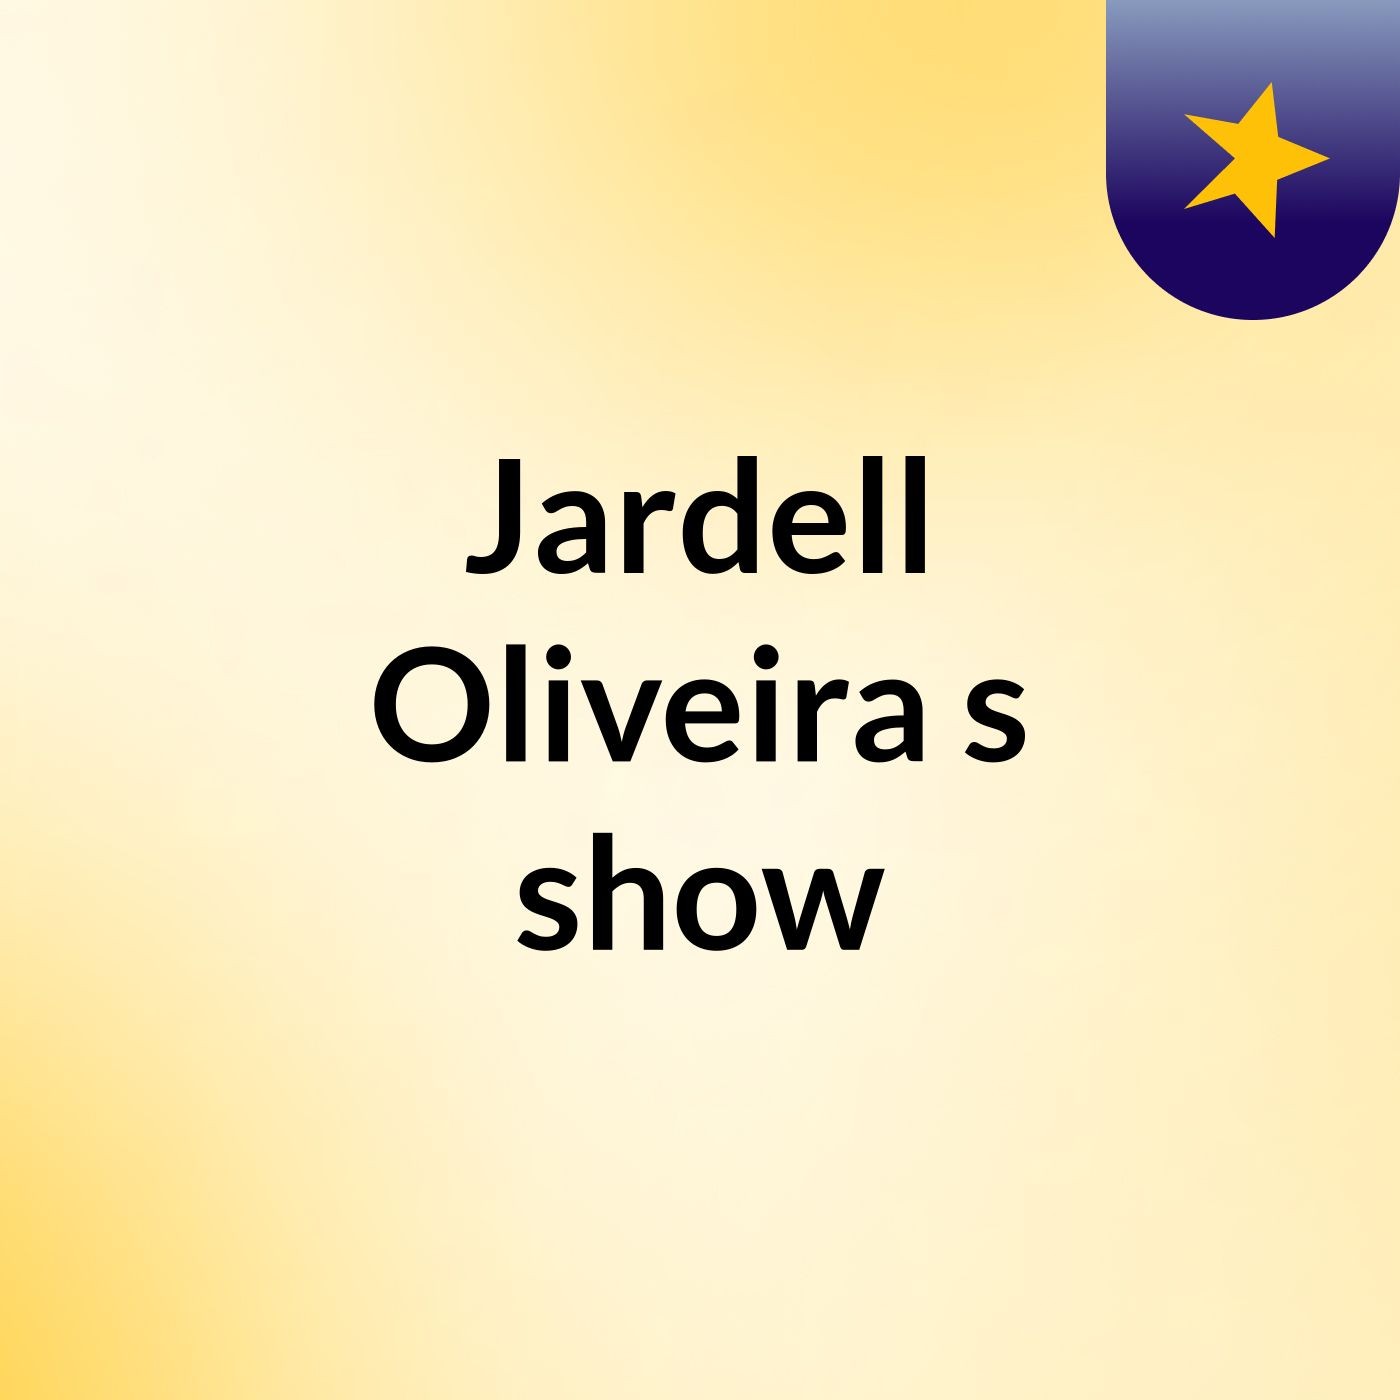 Jardell Oliveira's show